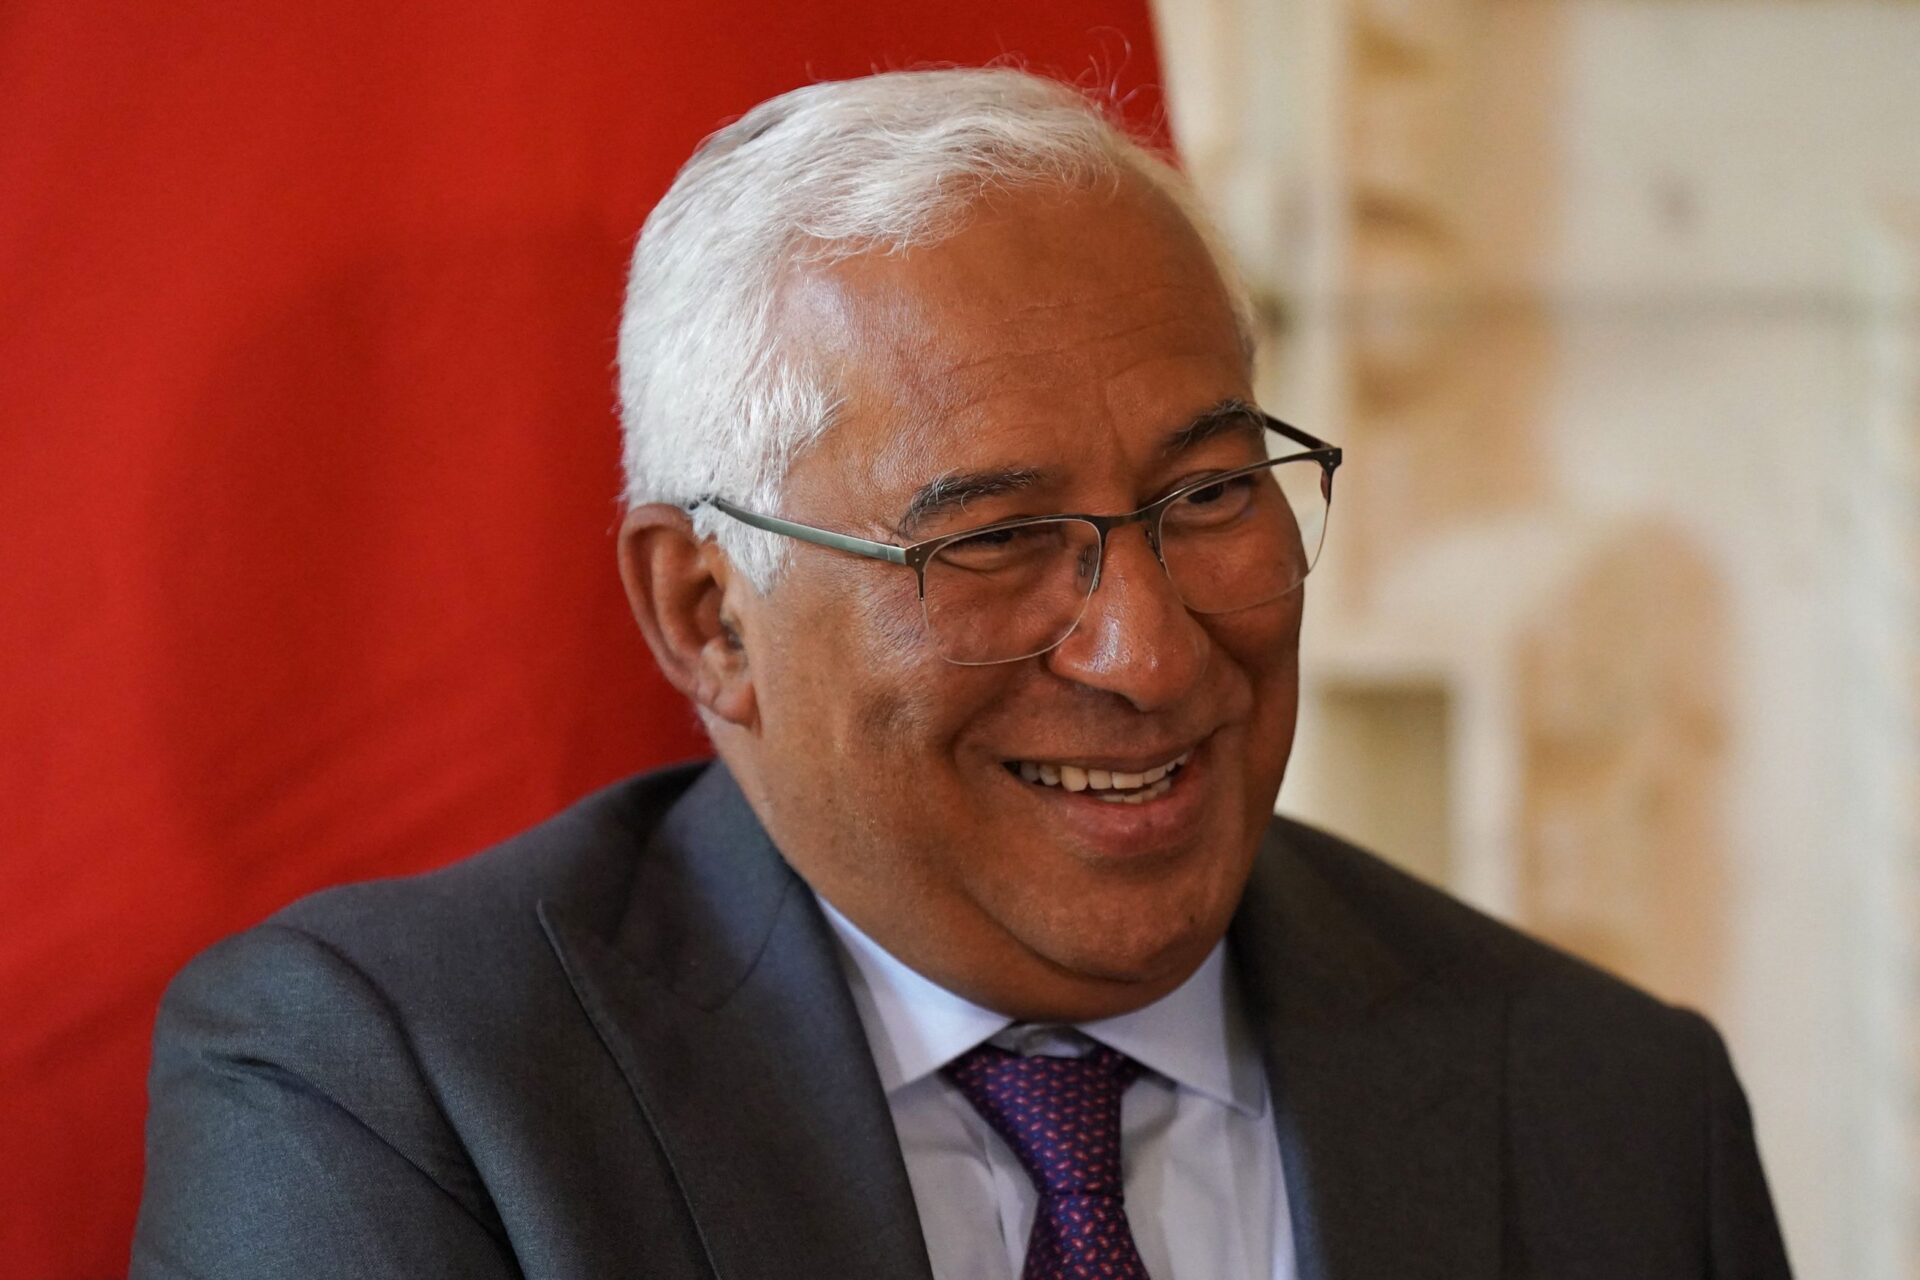 Primeiro-ministro deseja “maiores felicidades” ao novo patriarca de Lisboa